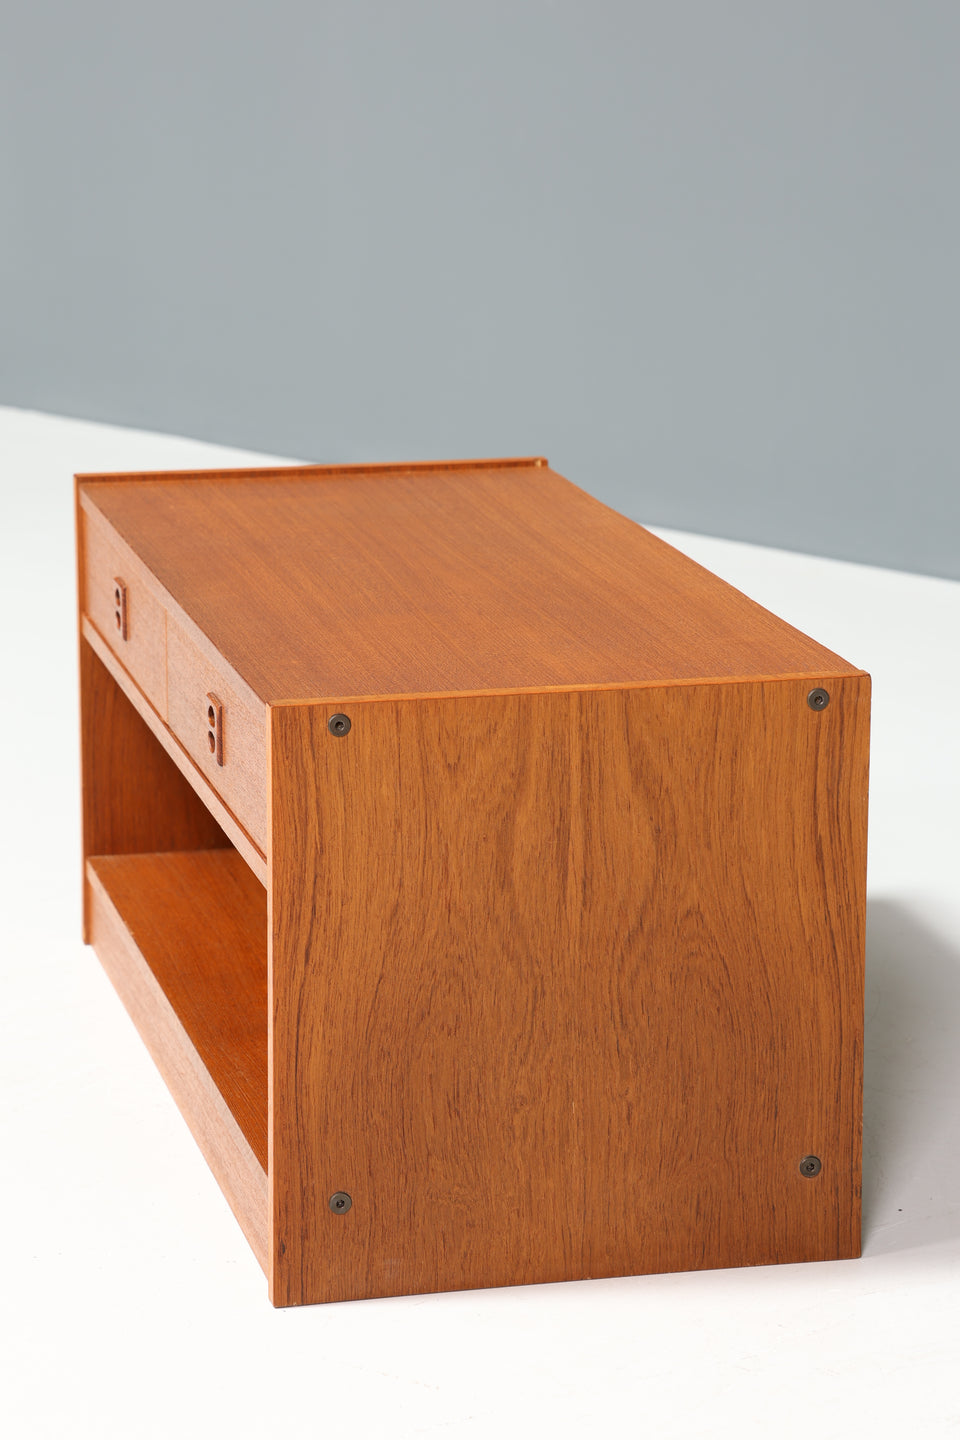 Wunderschöne Mid Century Kommode "Made in Sweden" Teak Holz Hifi Kommode Sideboard 60er Jahre